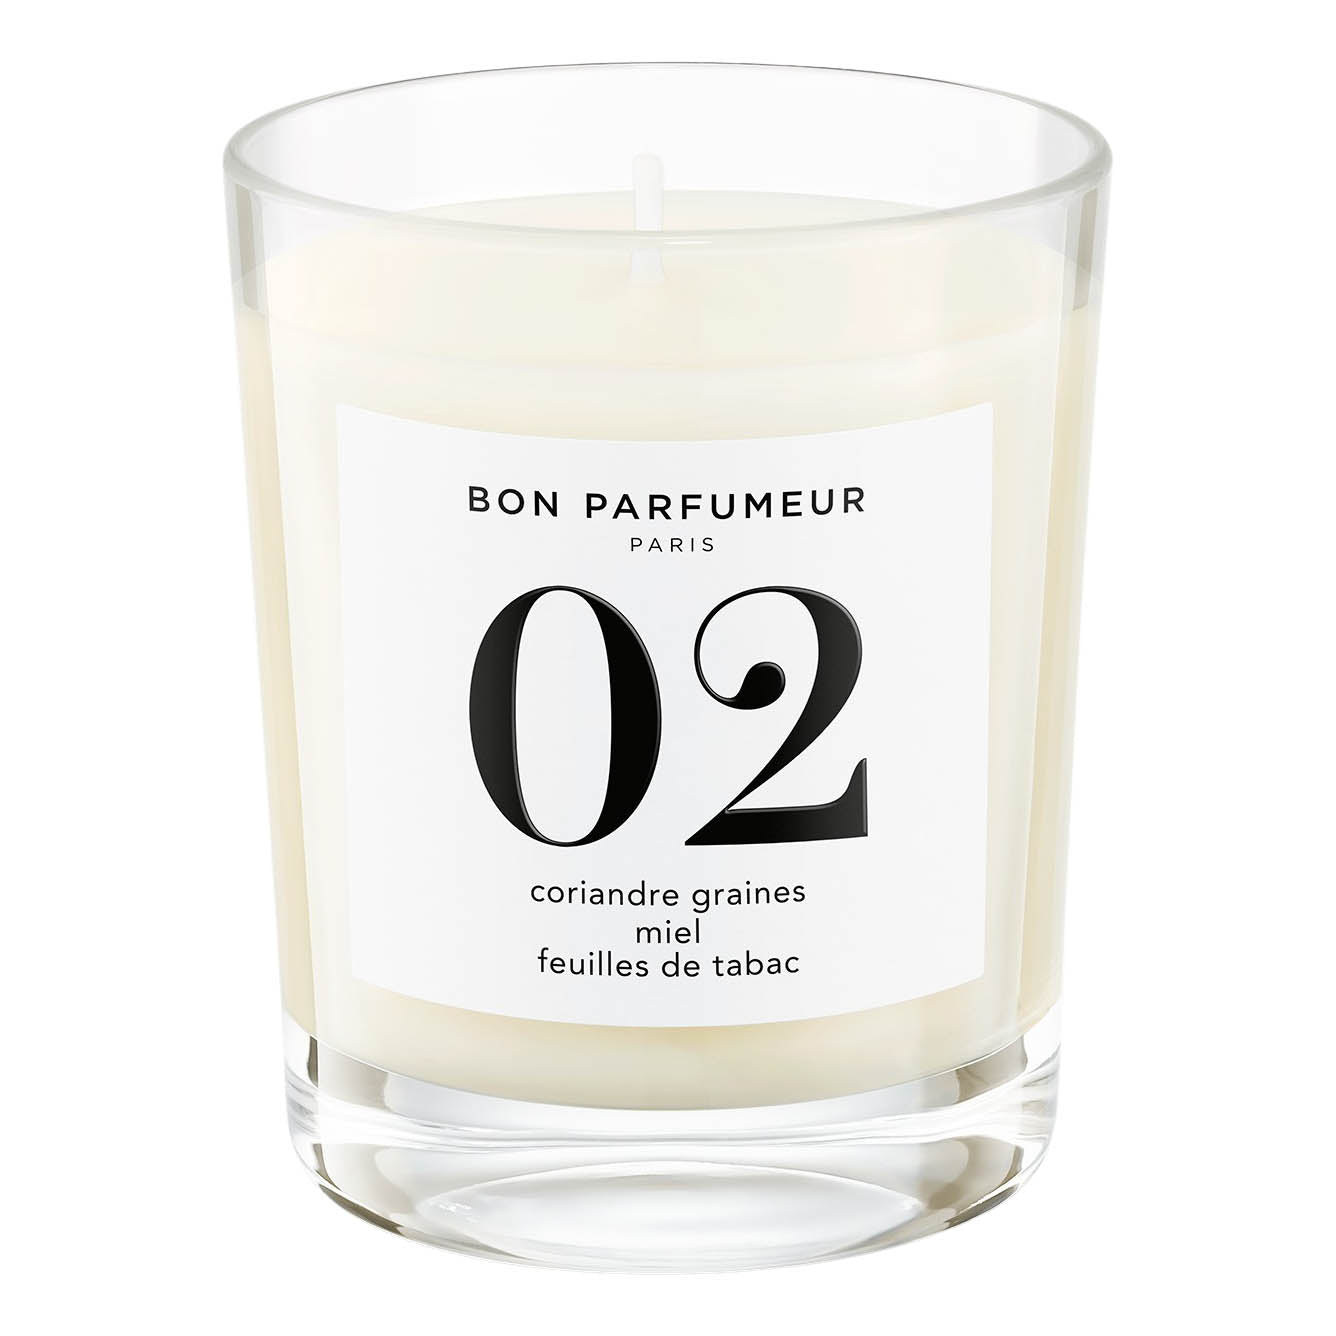 Bon Parfumeur duftlys 02 70 g